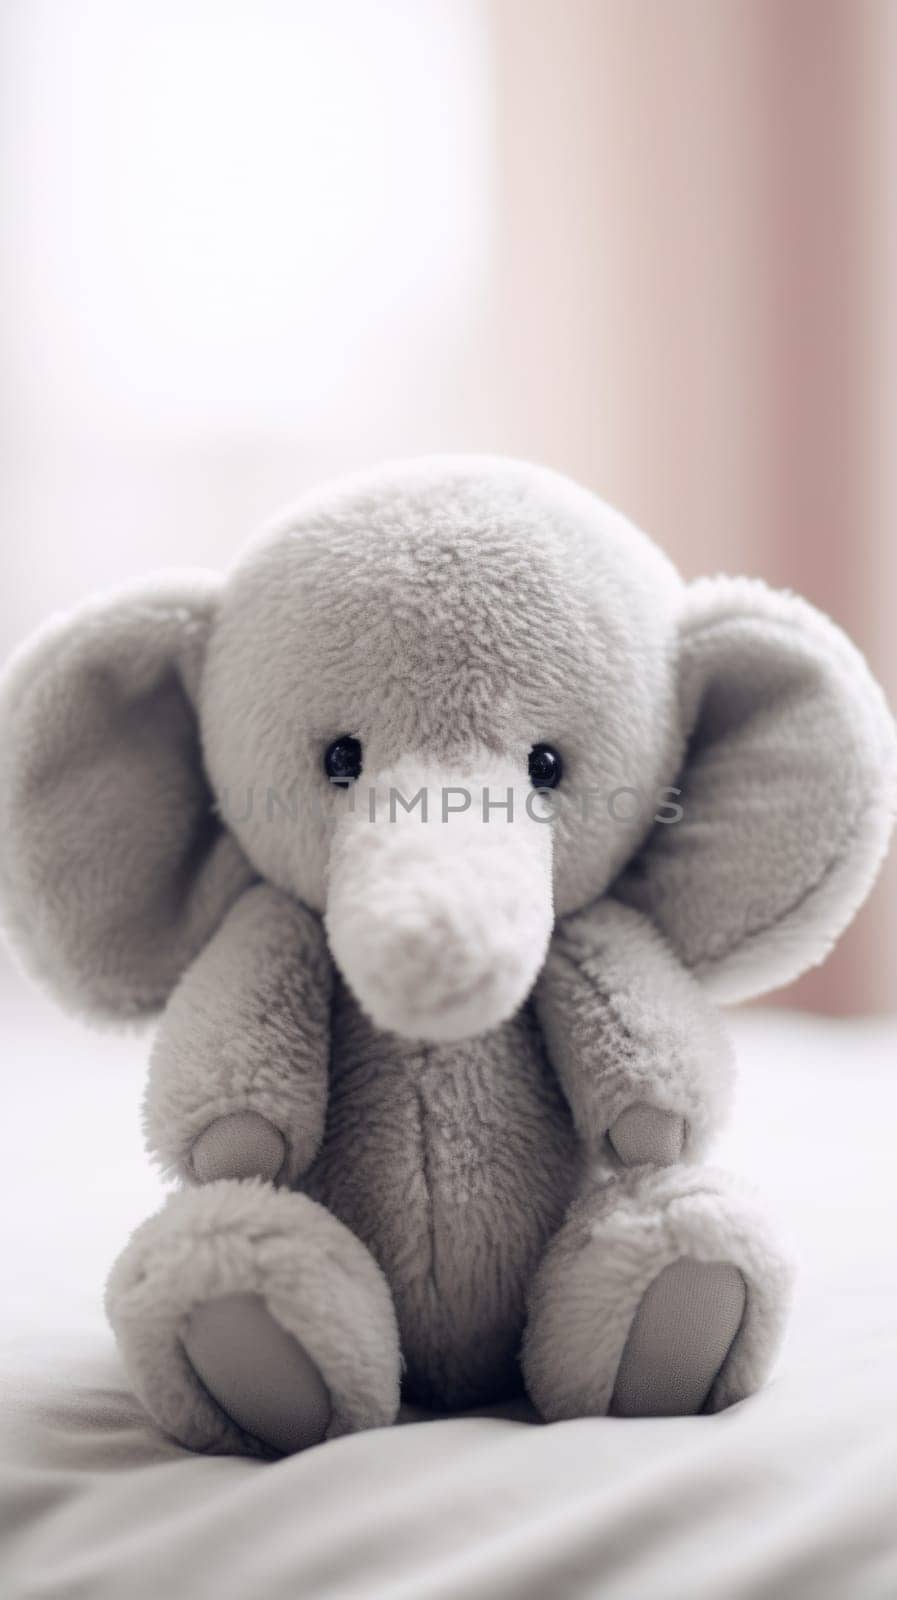 A stuffed elephant sitting on a bed